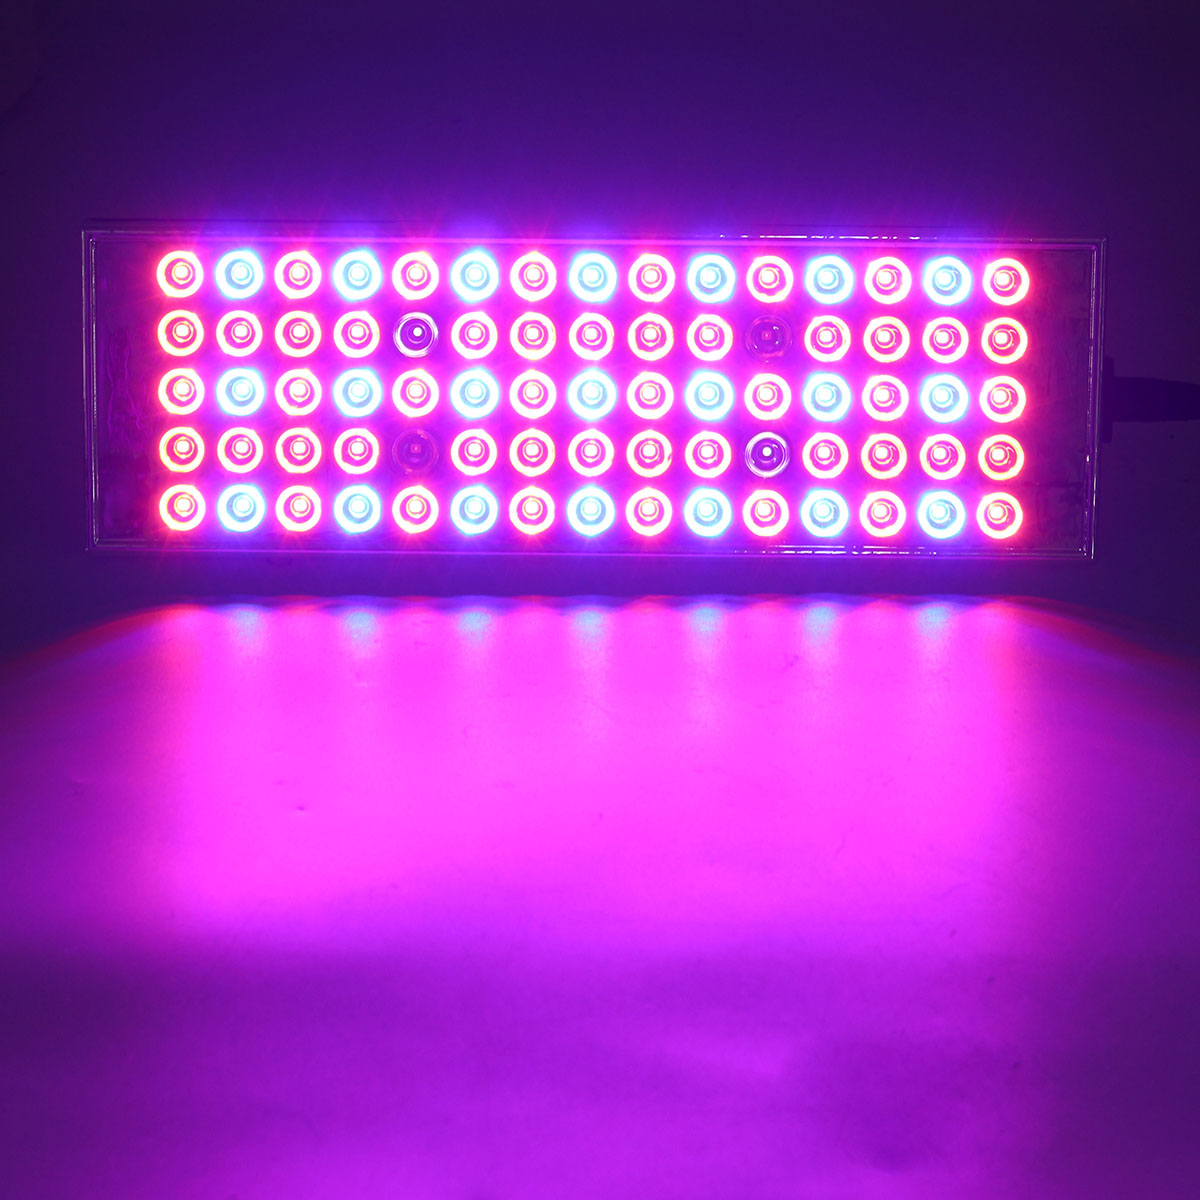 800W-LED-Grow-Light-Full-Spectrum-Growing-Plant-Lamp-For-Hydroponics-Veg-Indoor-1807202-6